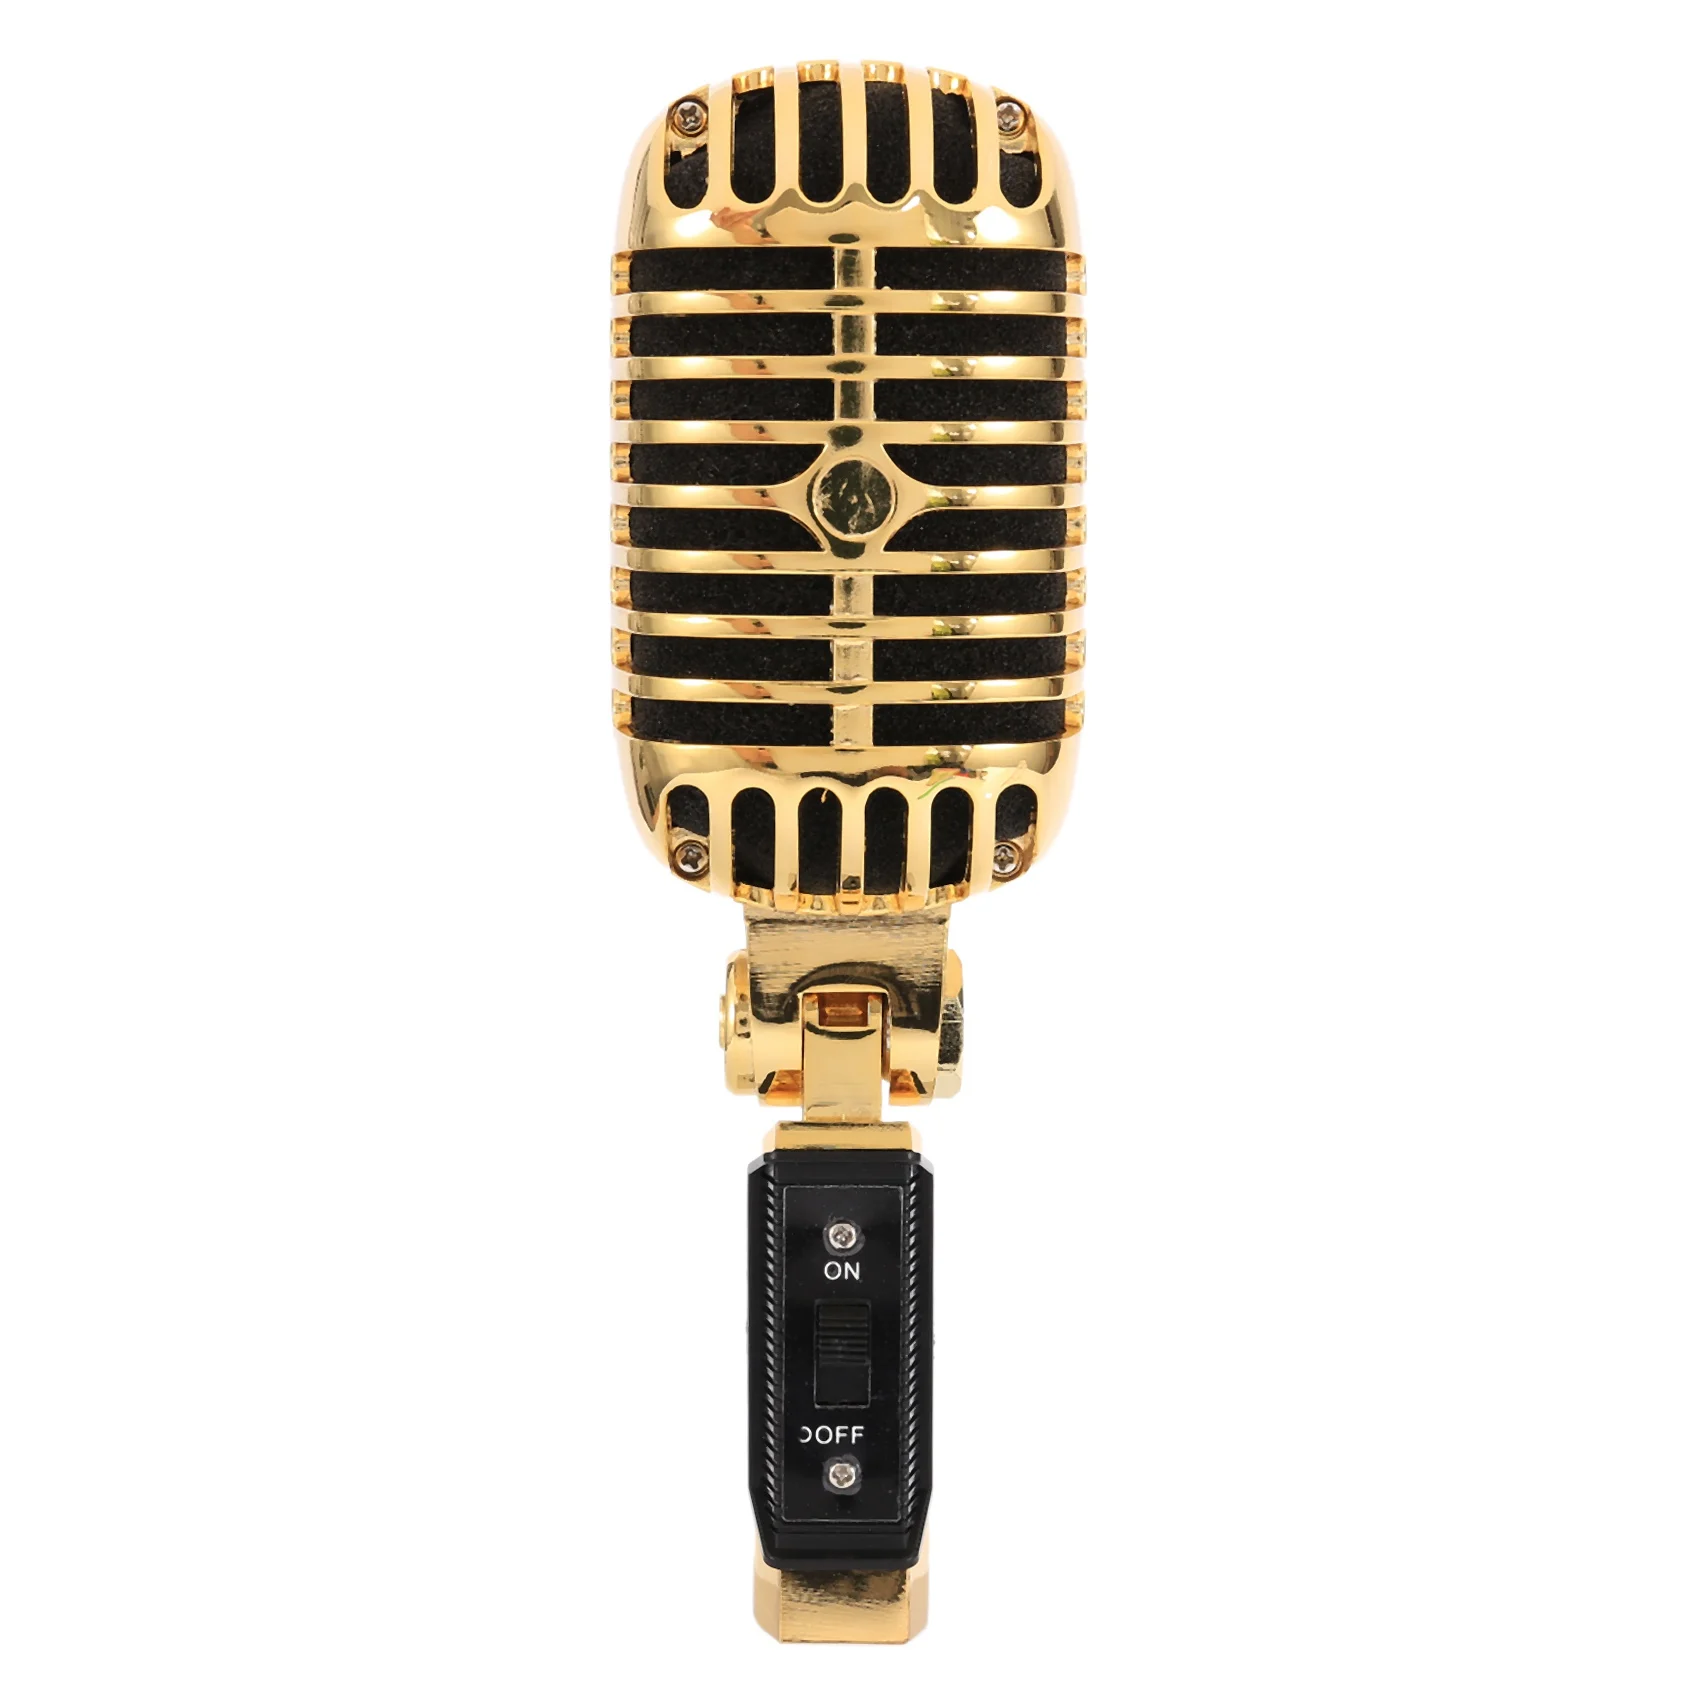 Profissional com Fio Vintage Clássico Microfone Dynamic Vocal Microfone Microfone para Performance ao Vivo e Karaoke(Ouro)